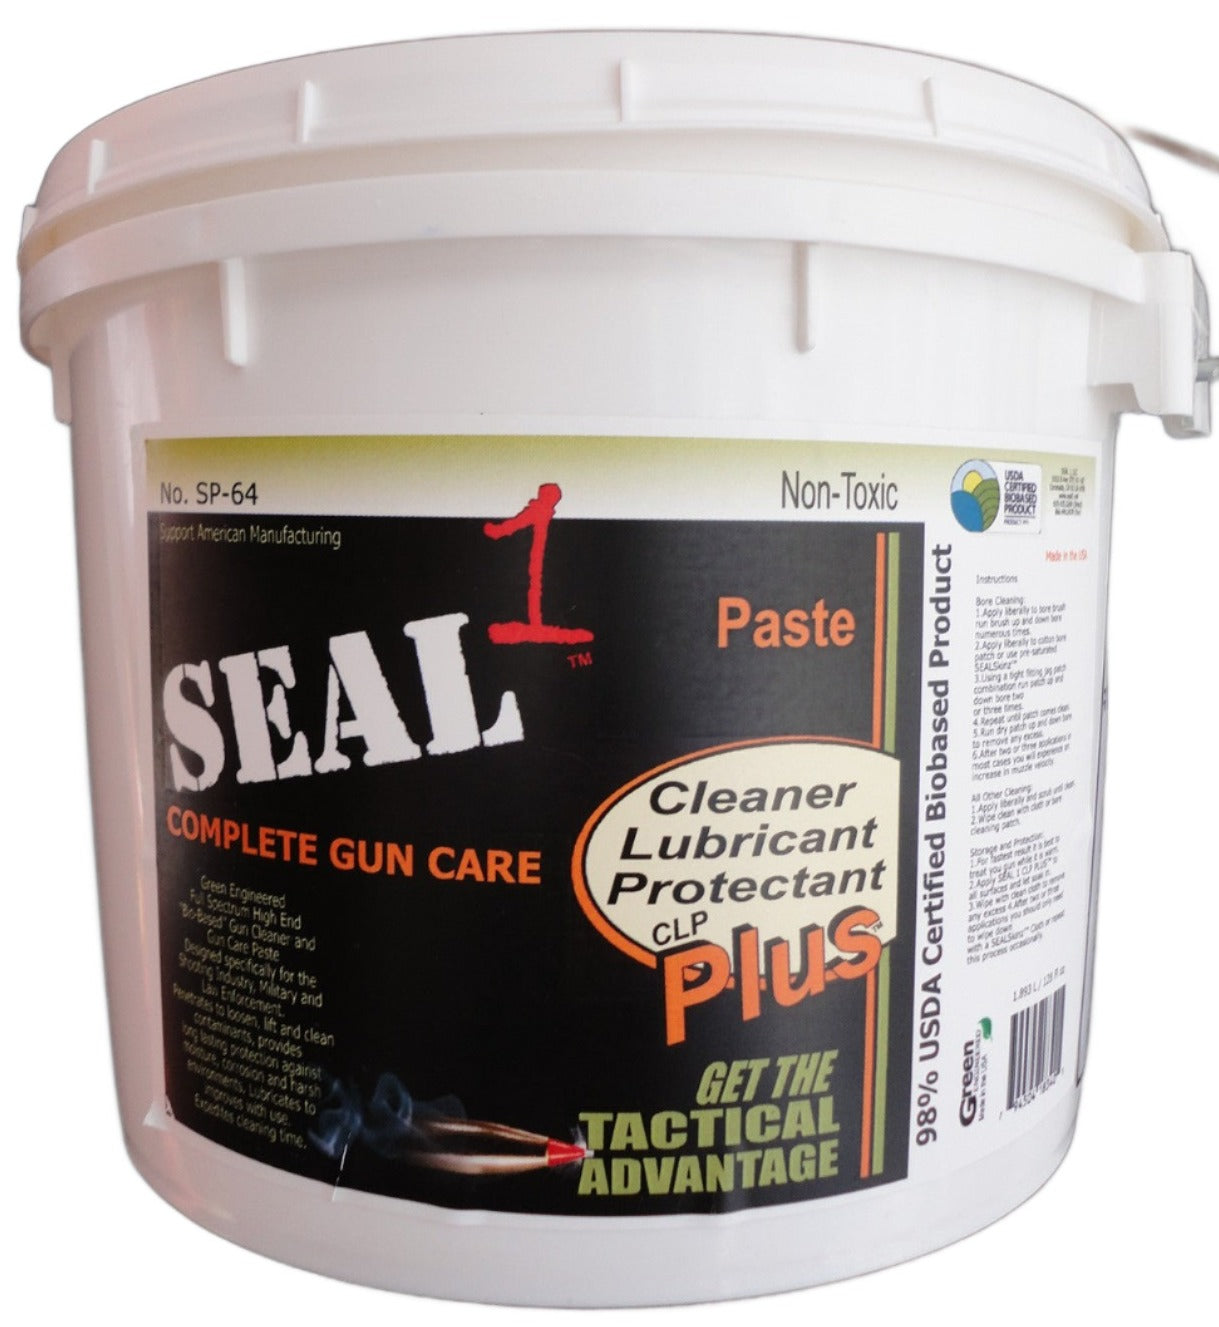 SEAL 1 CLP PLUS Paste 1 Gallon Pail